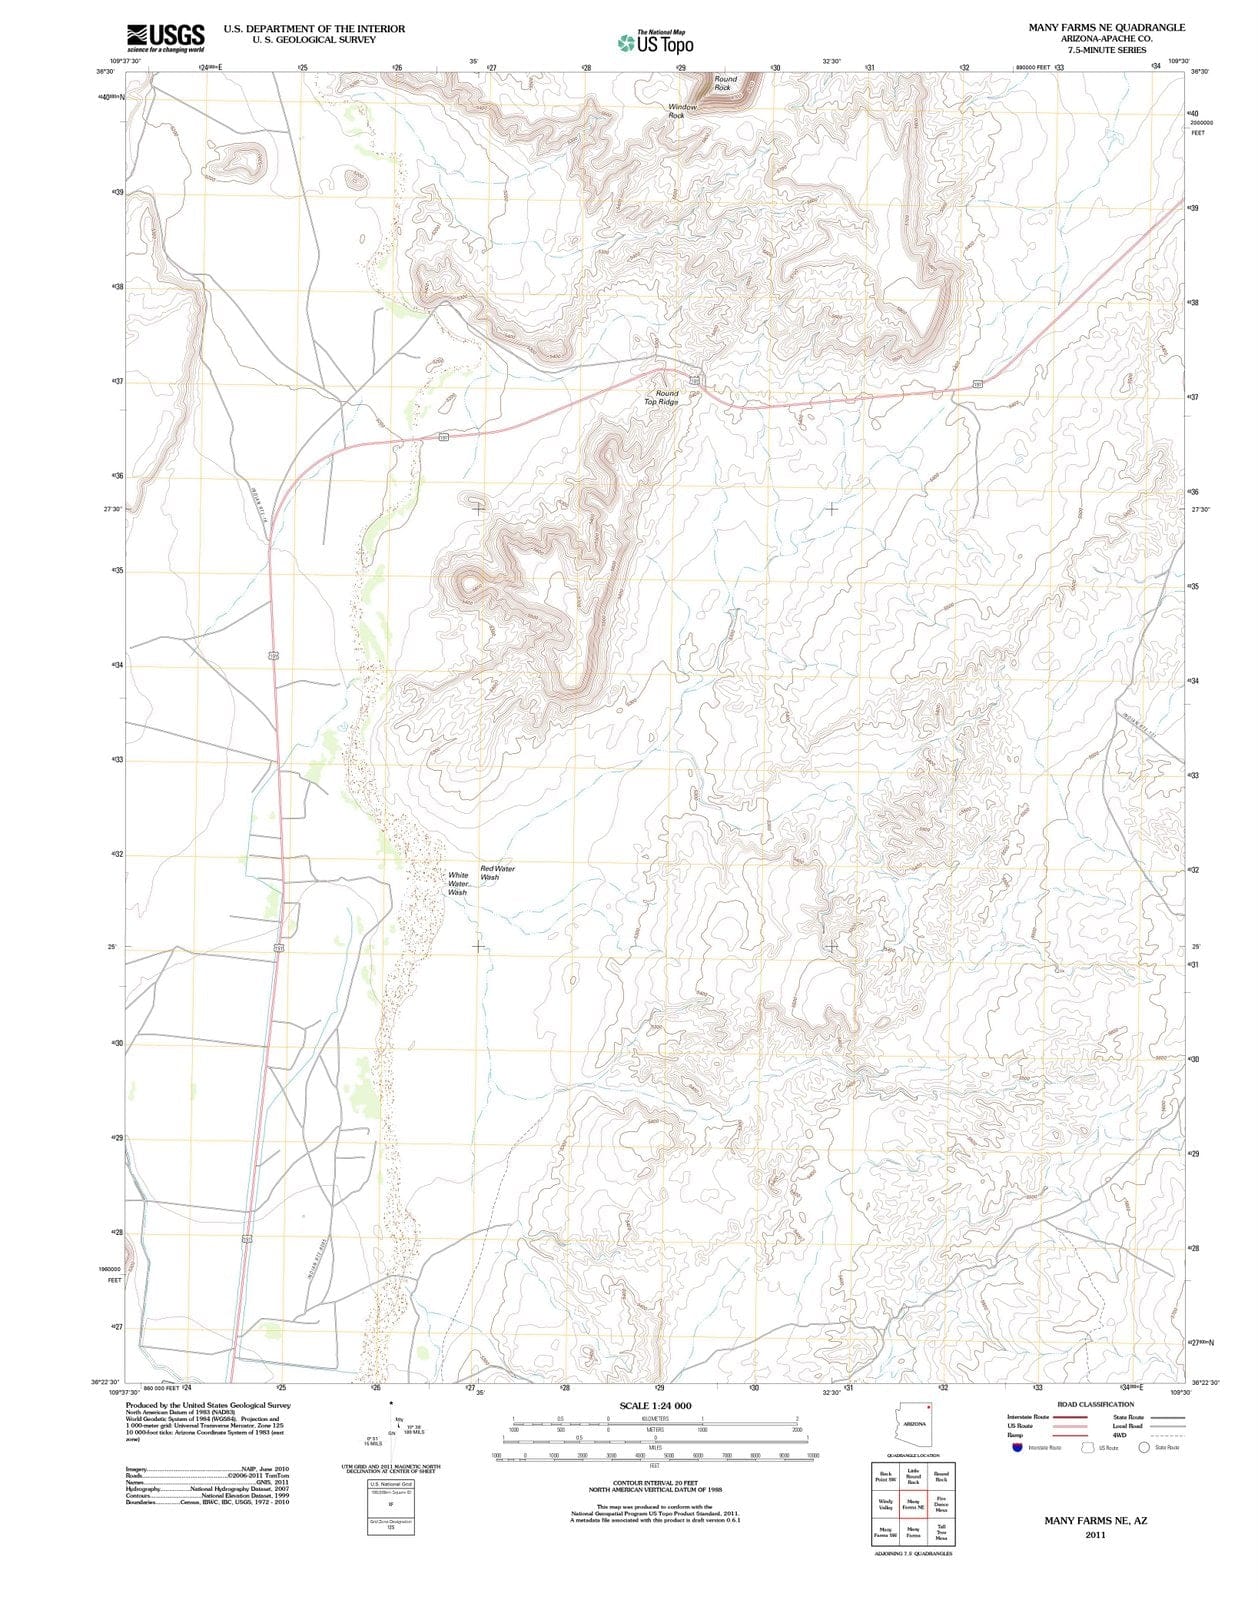 2011 Many Farms, AZ - Arizona - USGS Topographic Map